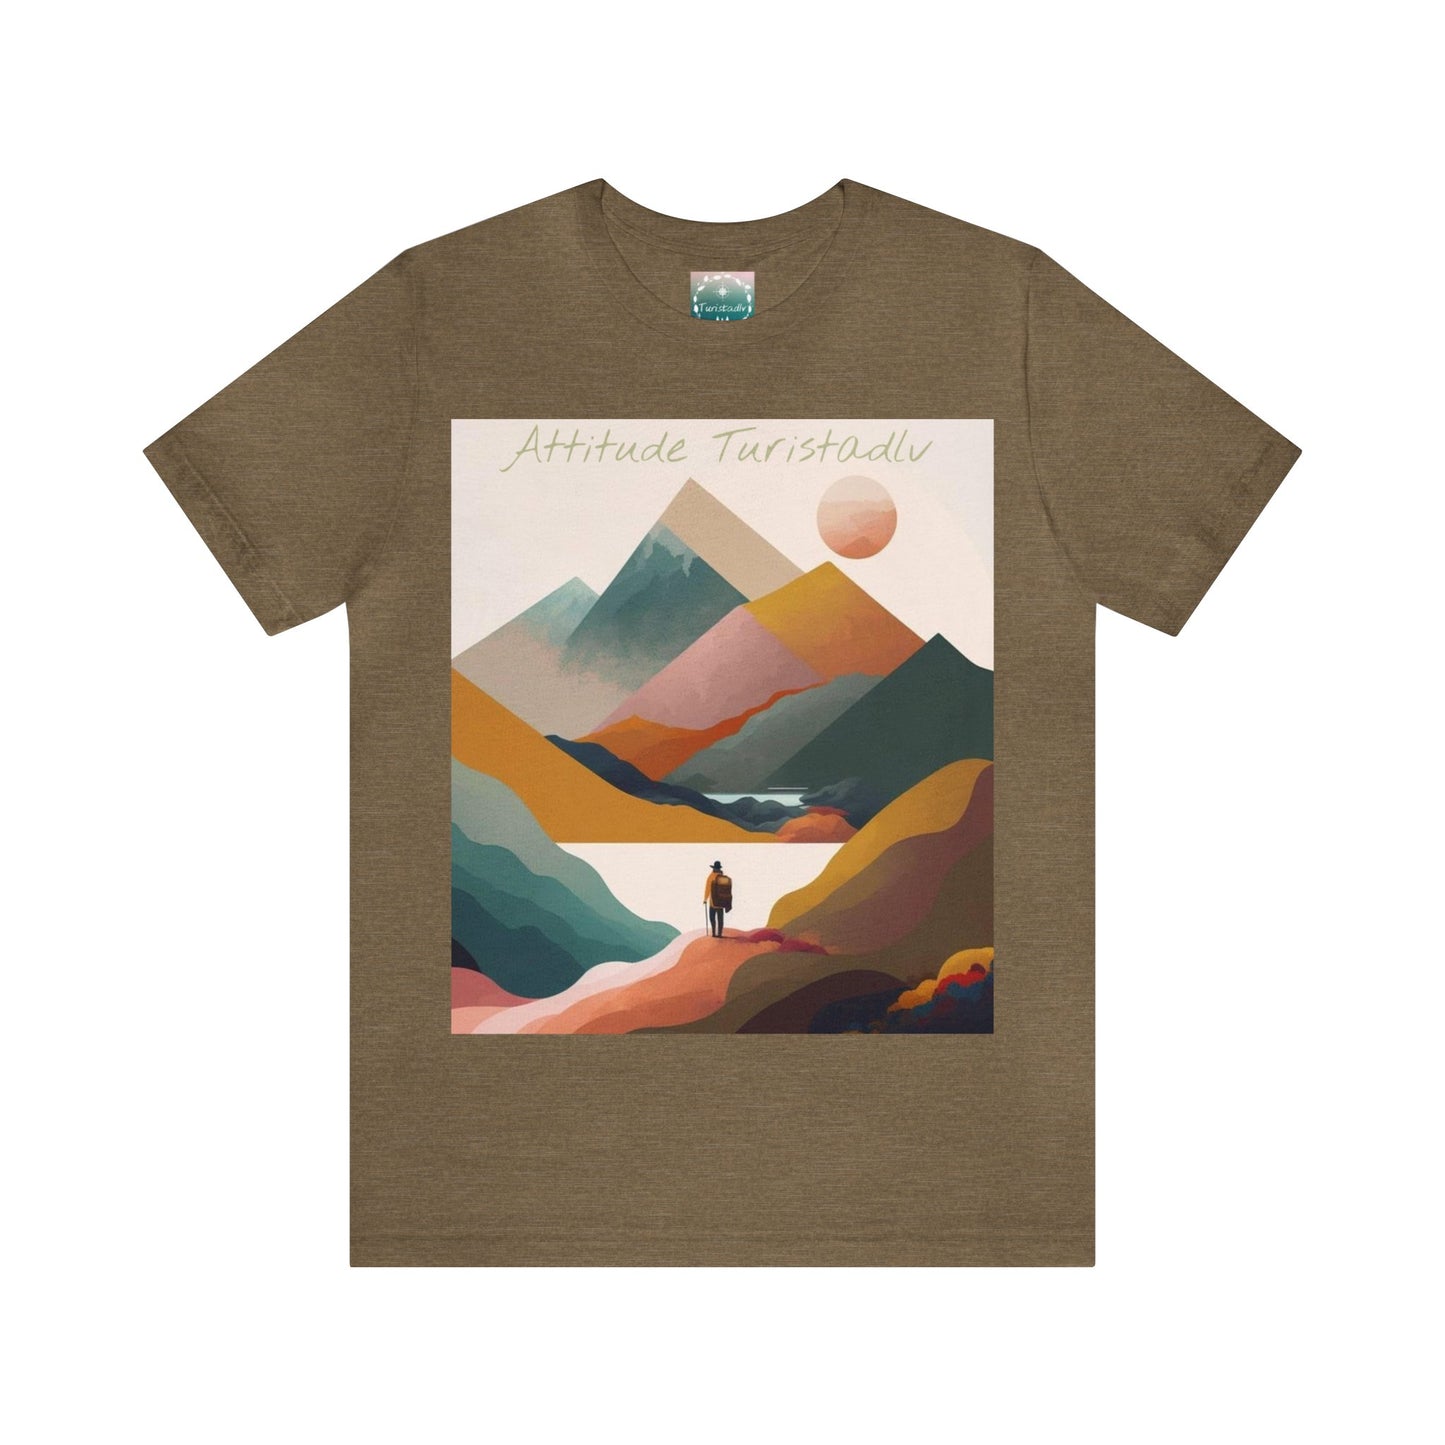 Camiseta de cordillera, camiseta de montaña, regalo de montaña, camiseta de viaje, regalo de viajes, camiseta aventura, regalo de montañero